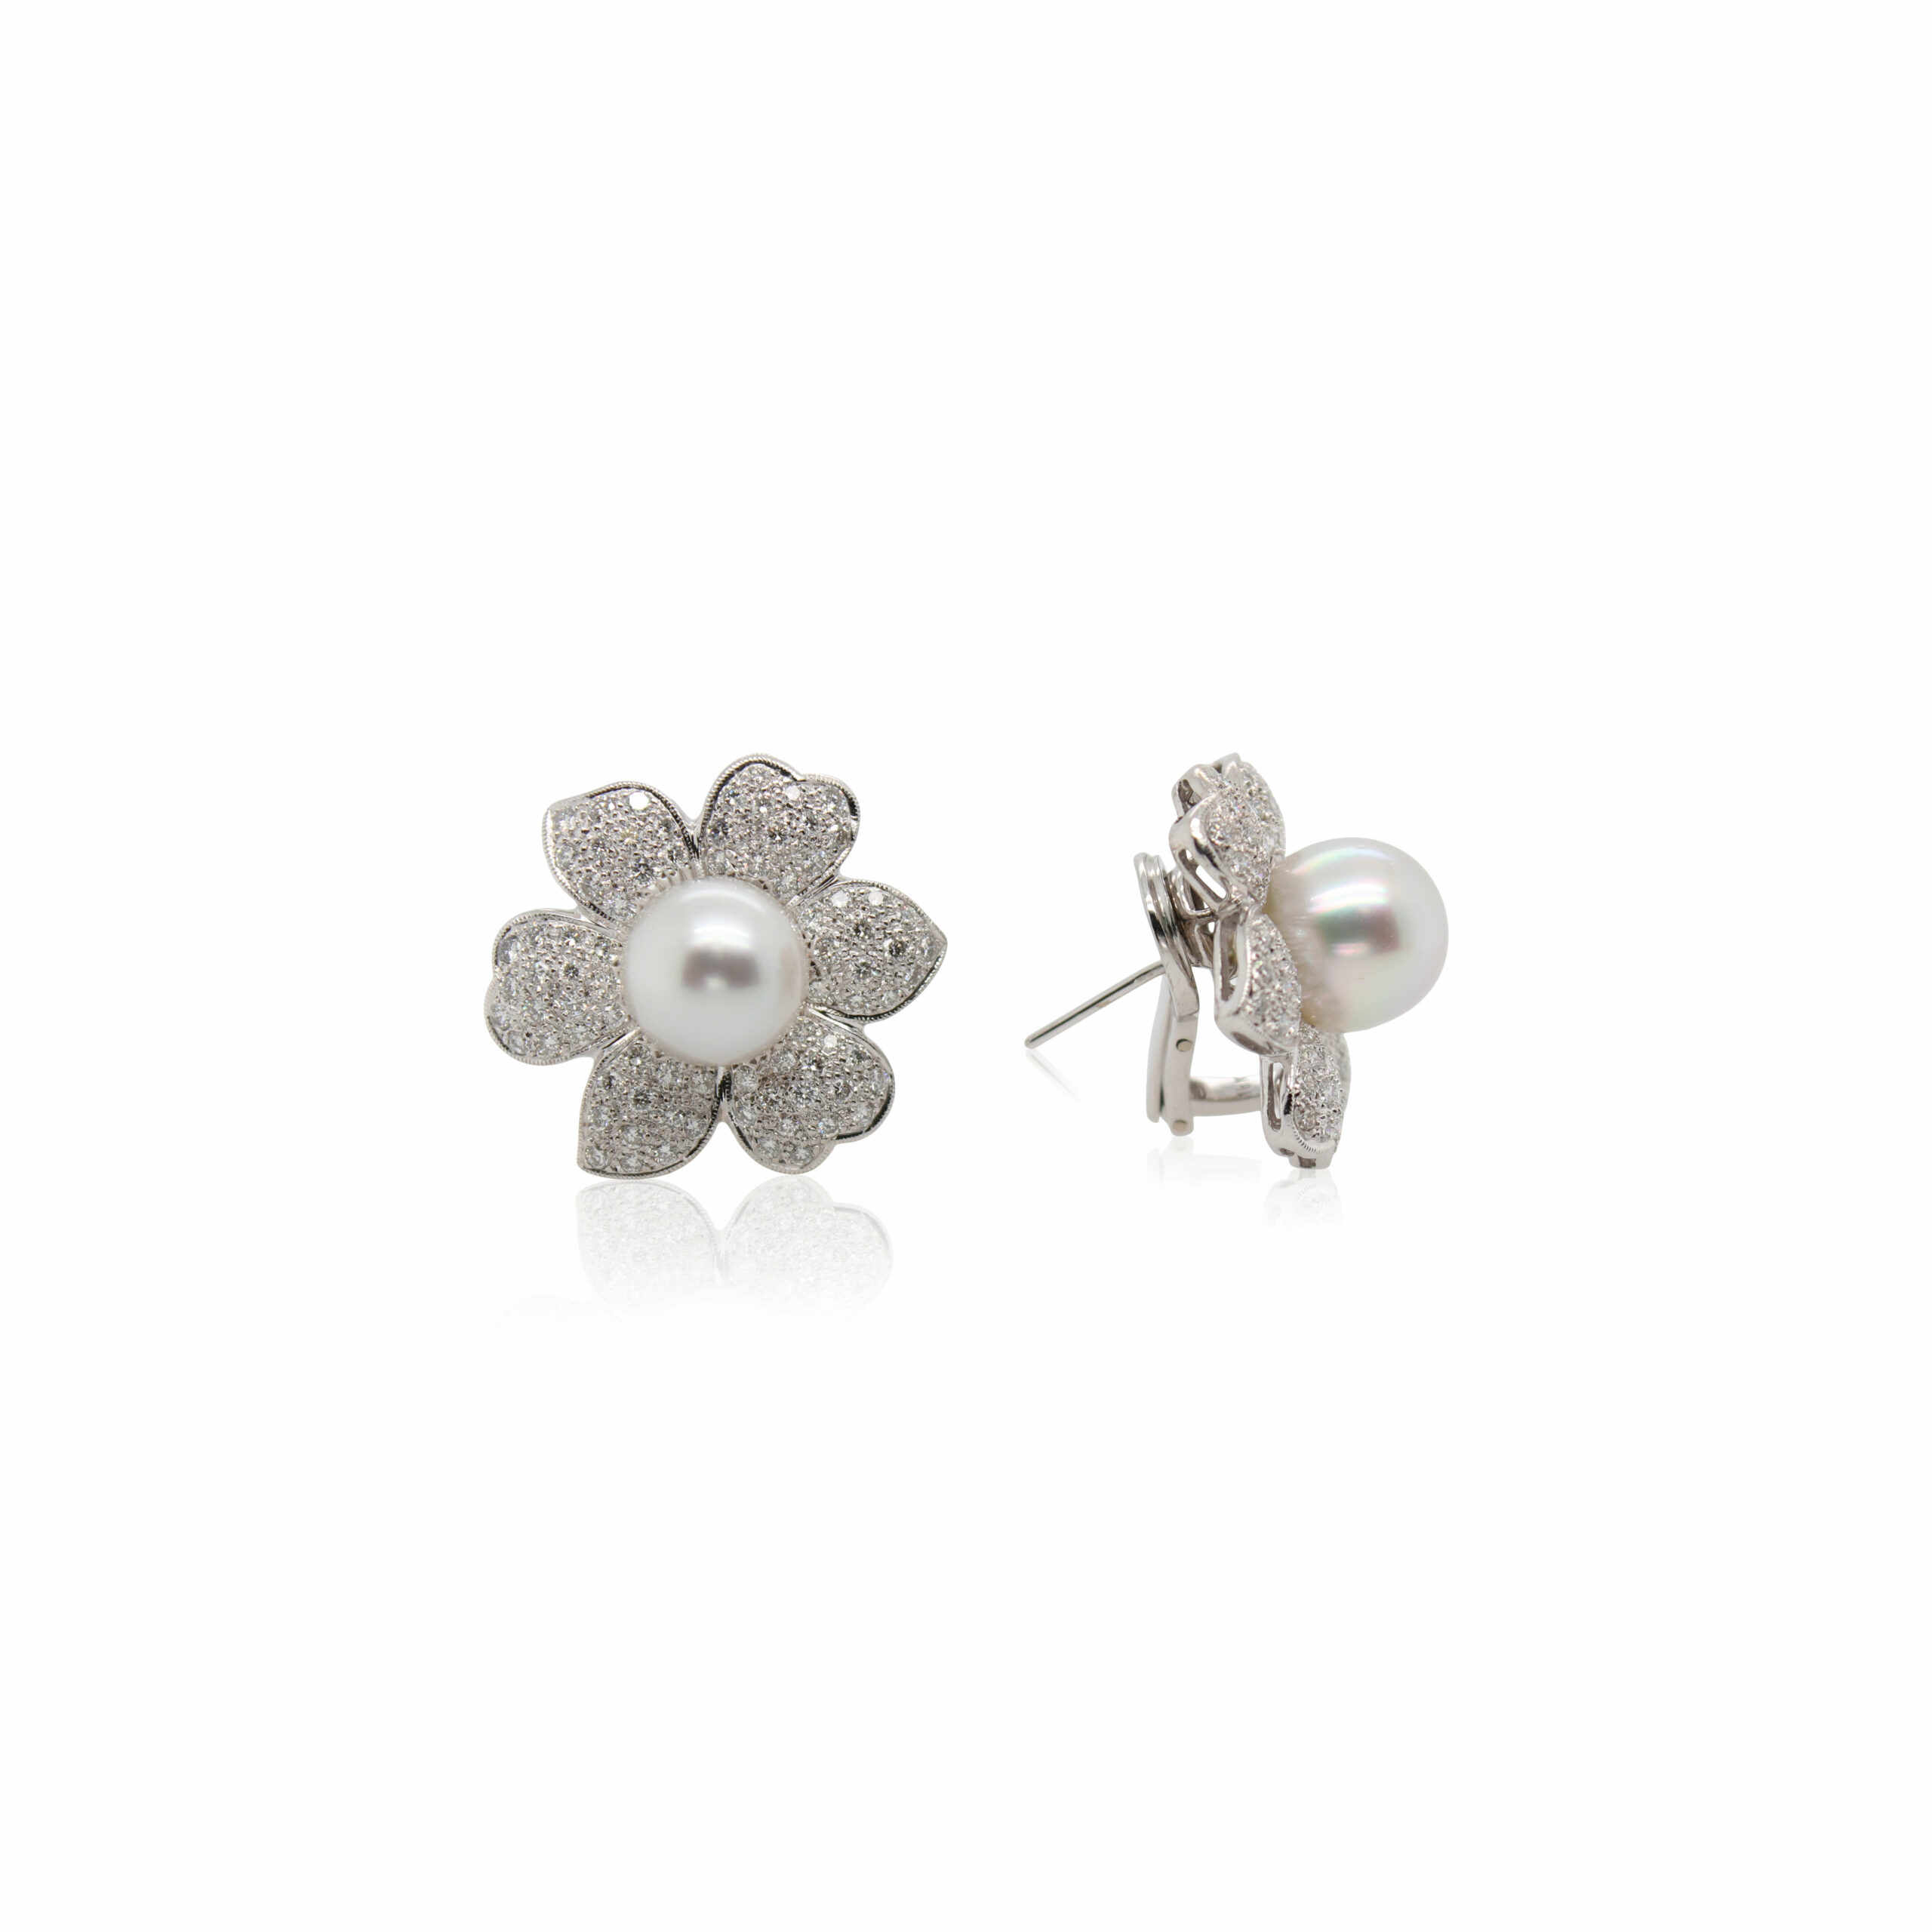 Danish earrings - Organic & square jewellery - Silver & gold - Livva –  Livva Østerby